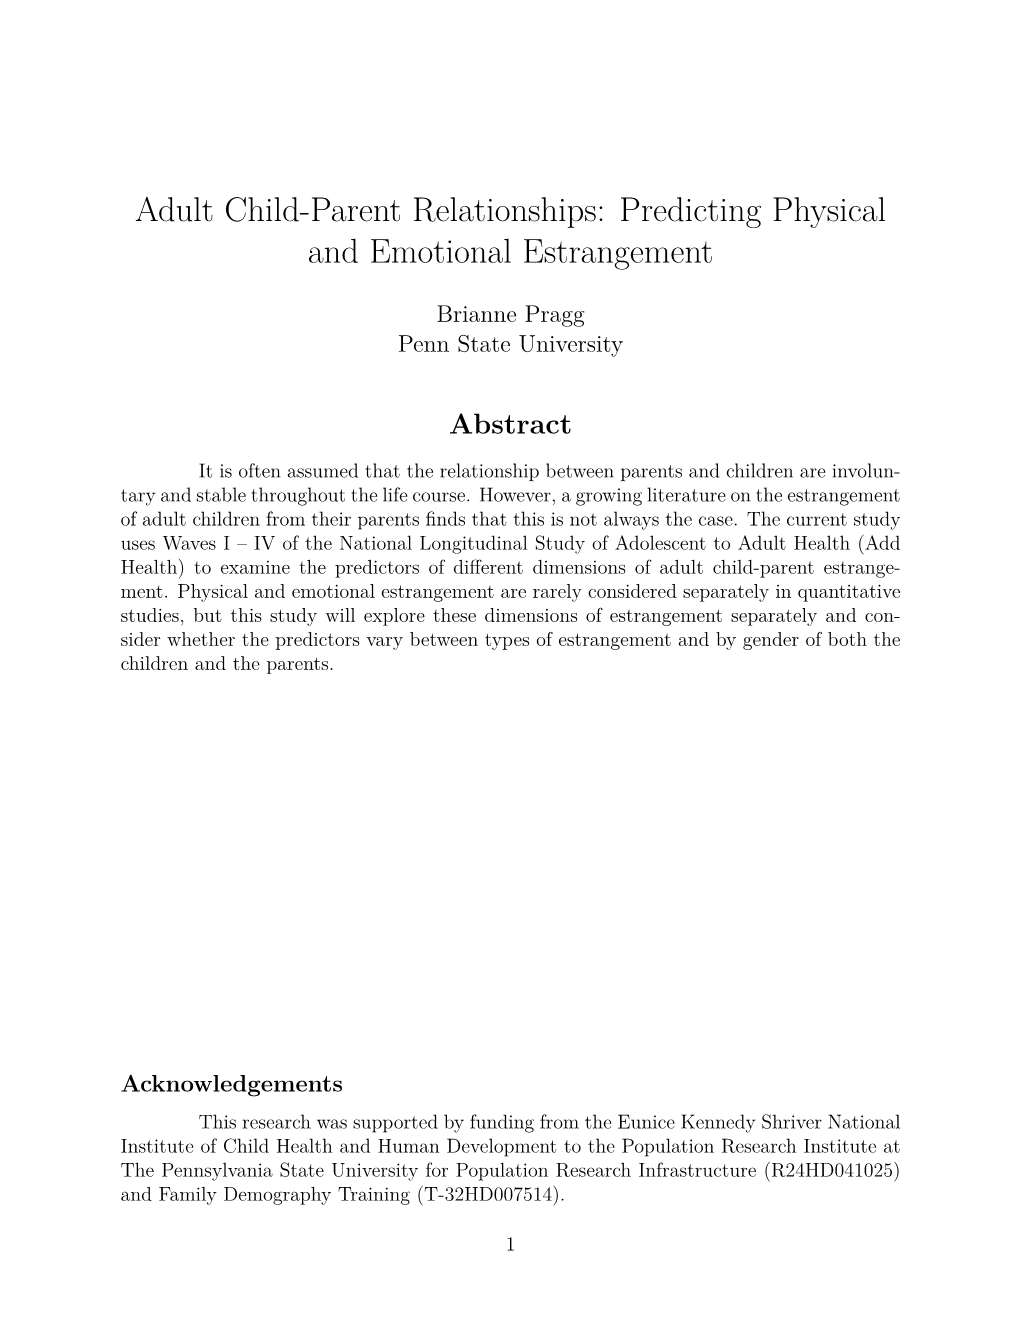 Adult Child-Parent Relationships: Predicting Physical and Emotional Estrangement